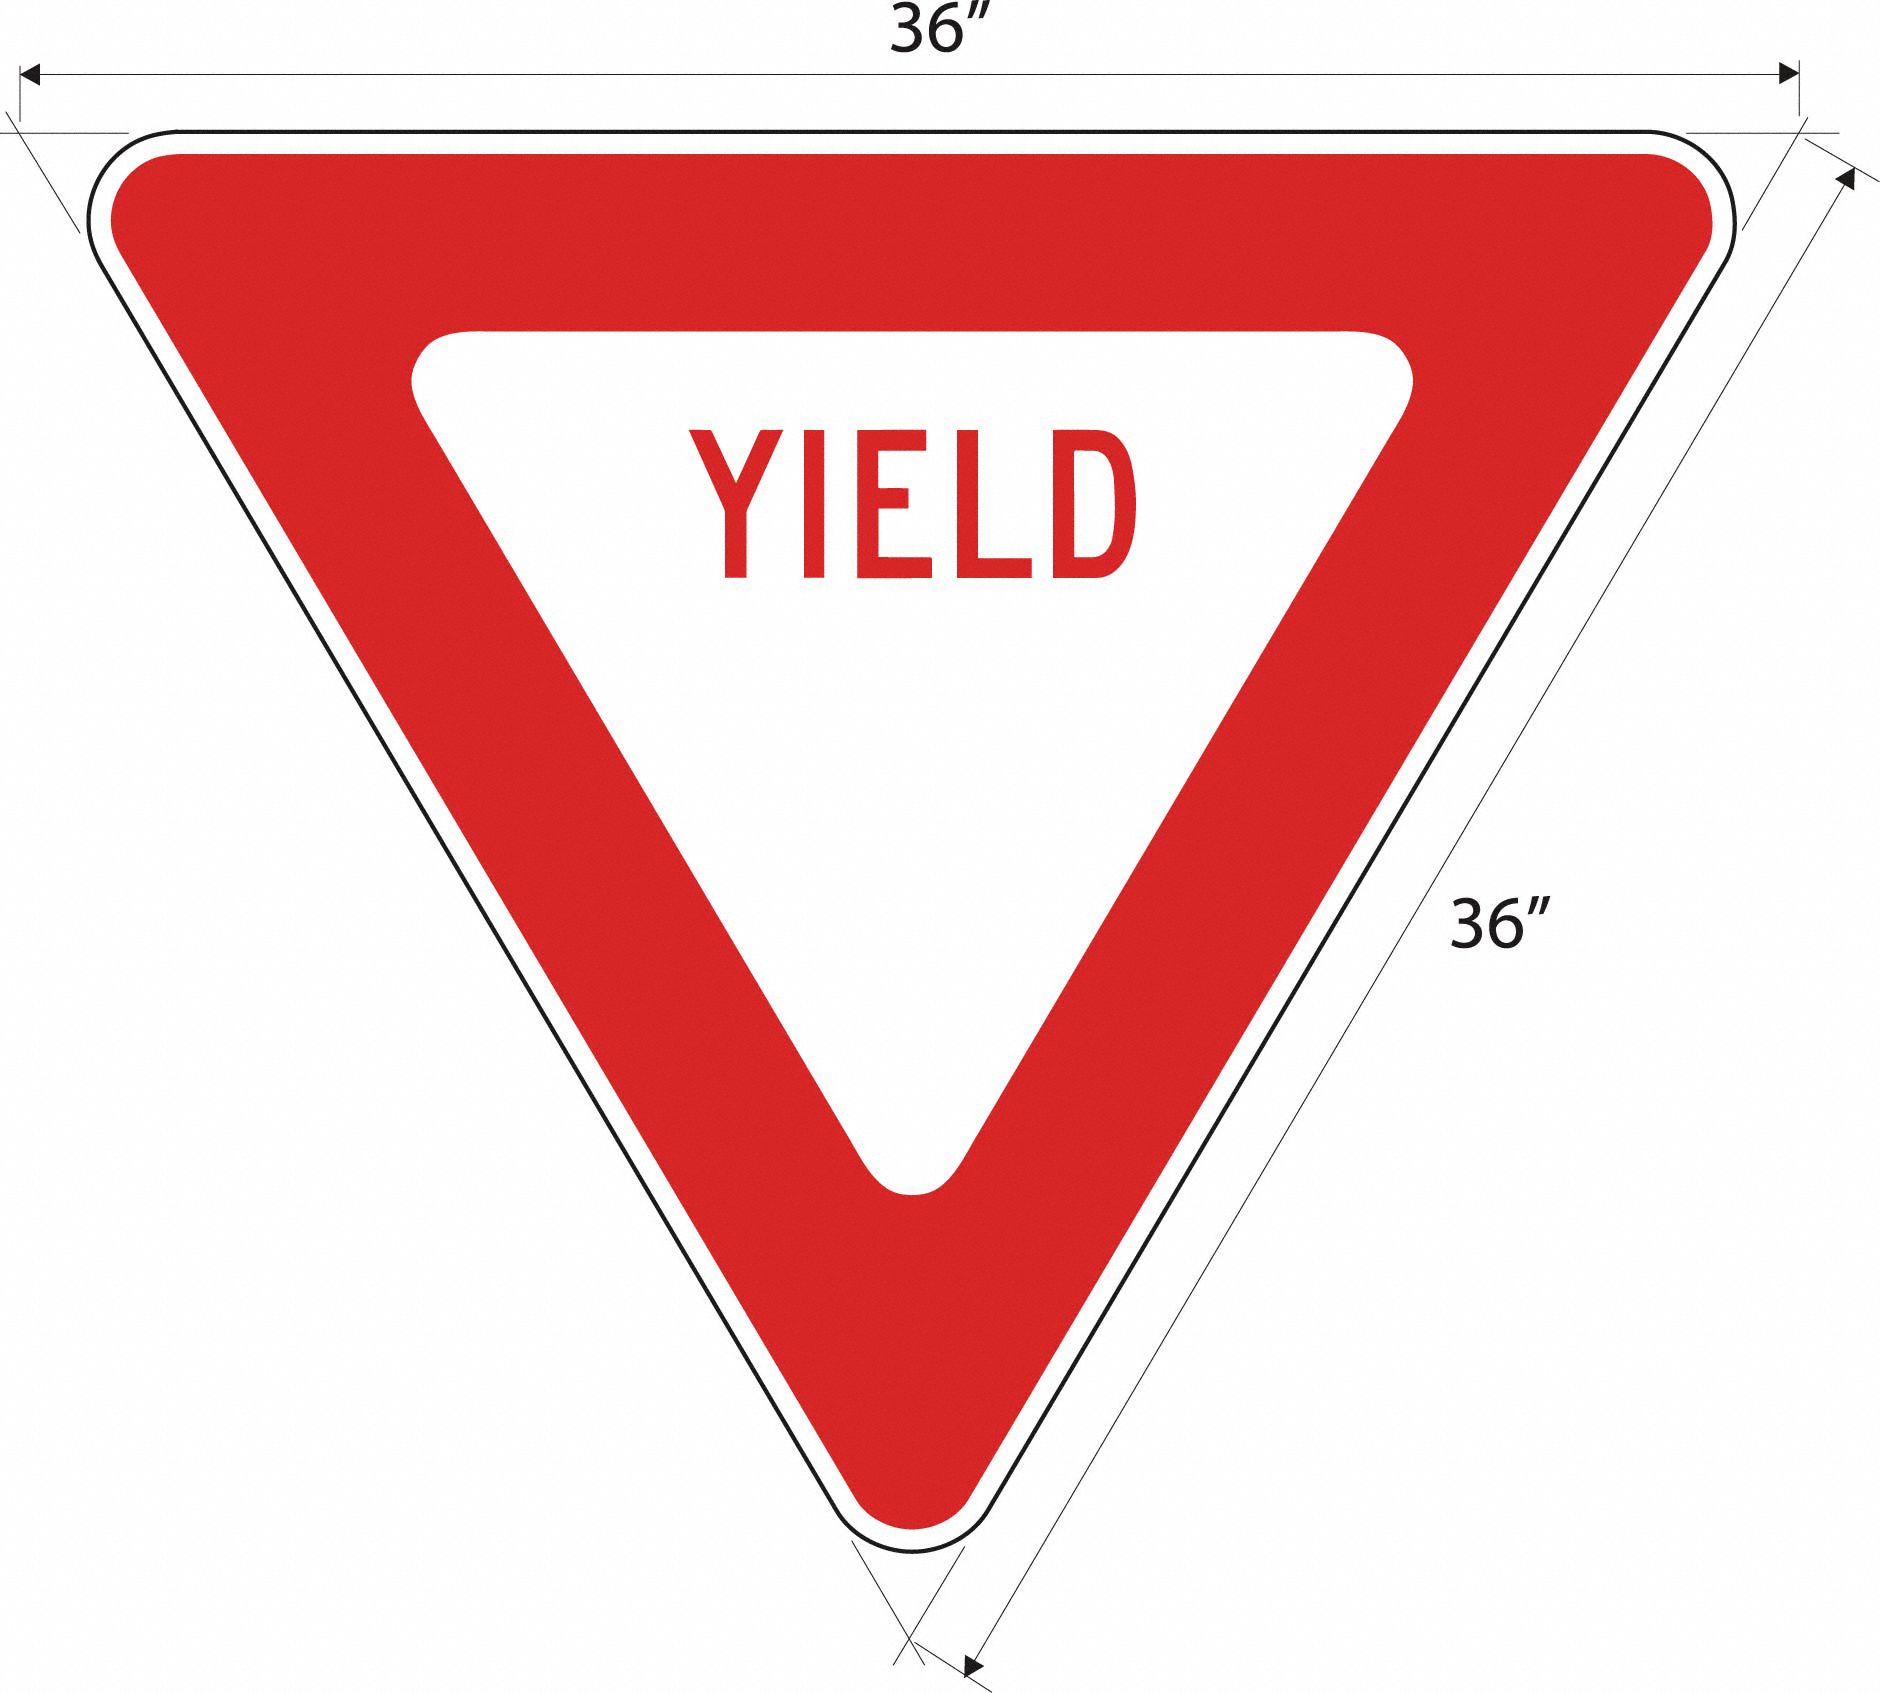 lyle-yield-traffic-sign-sign-legend-yield-mutcd-code-r1-2-36-in-x-36